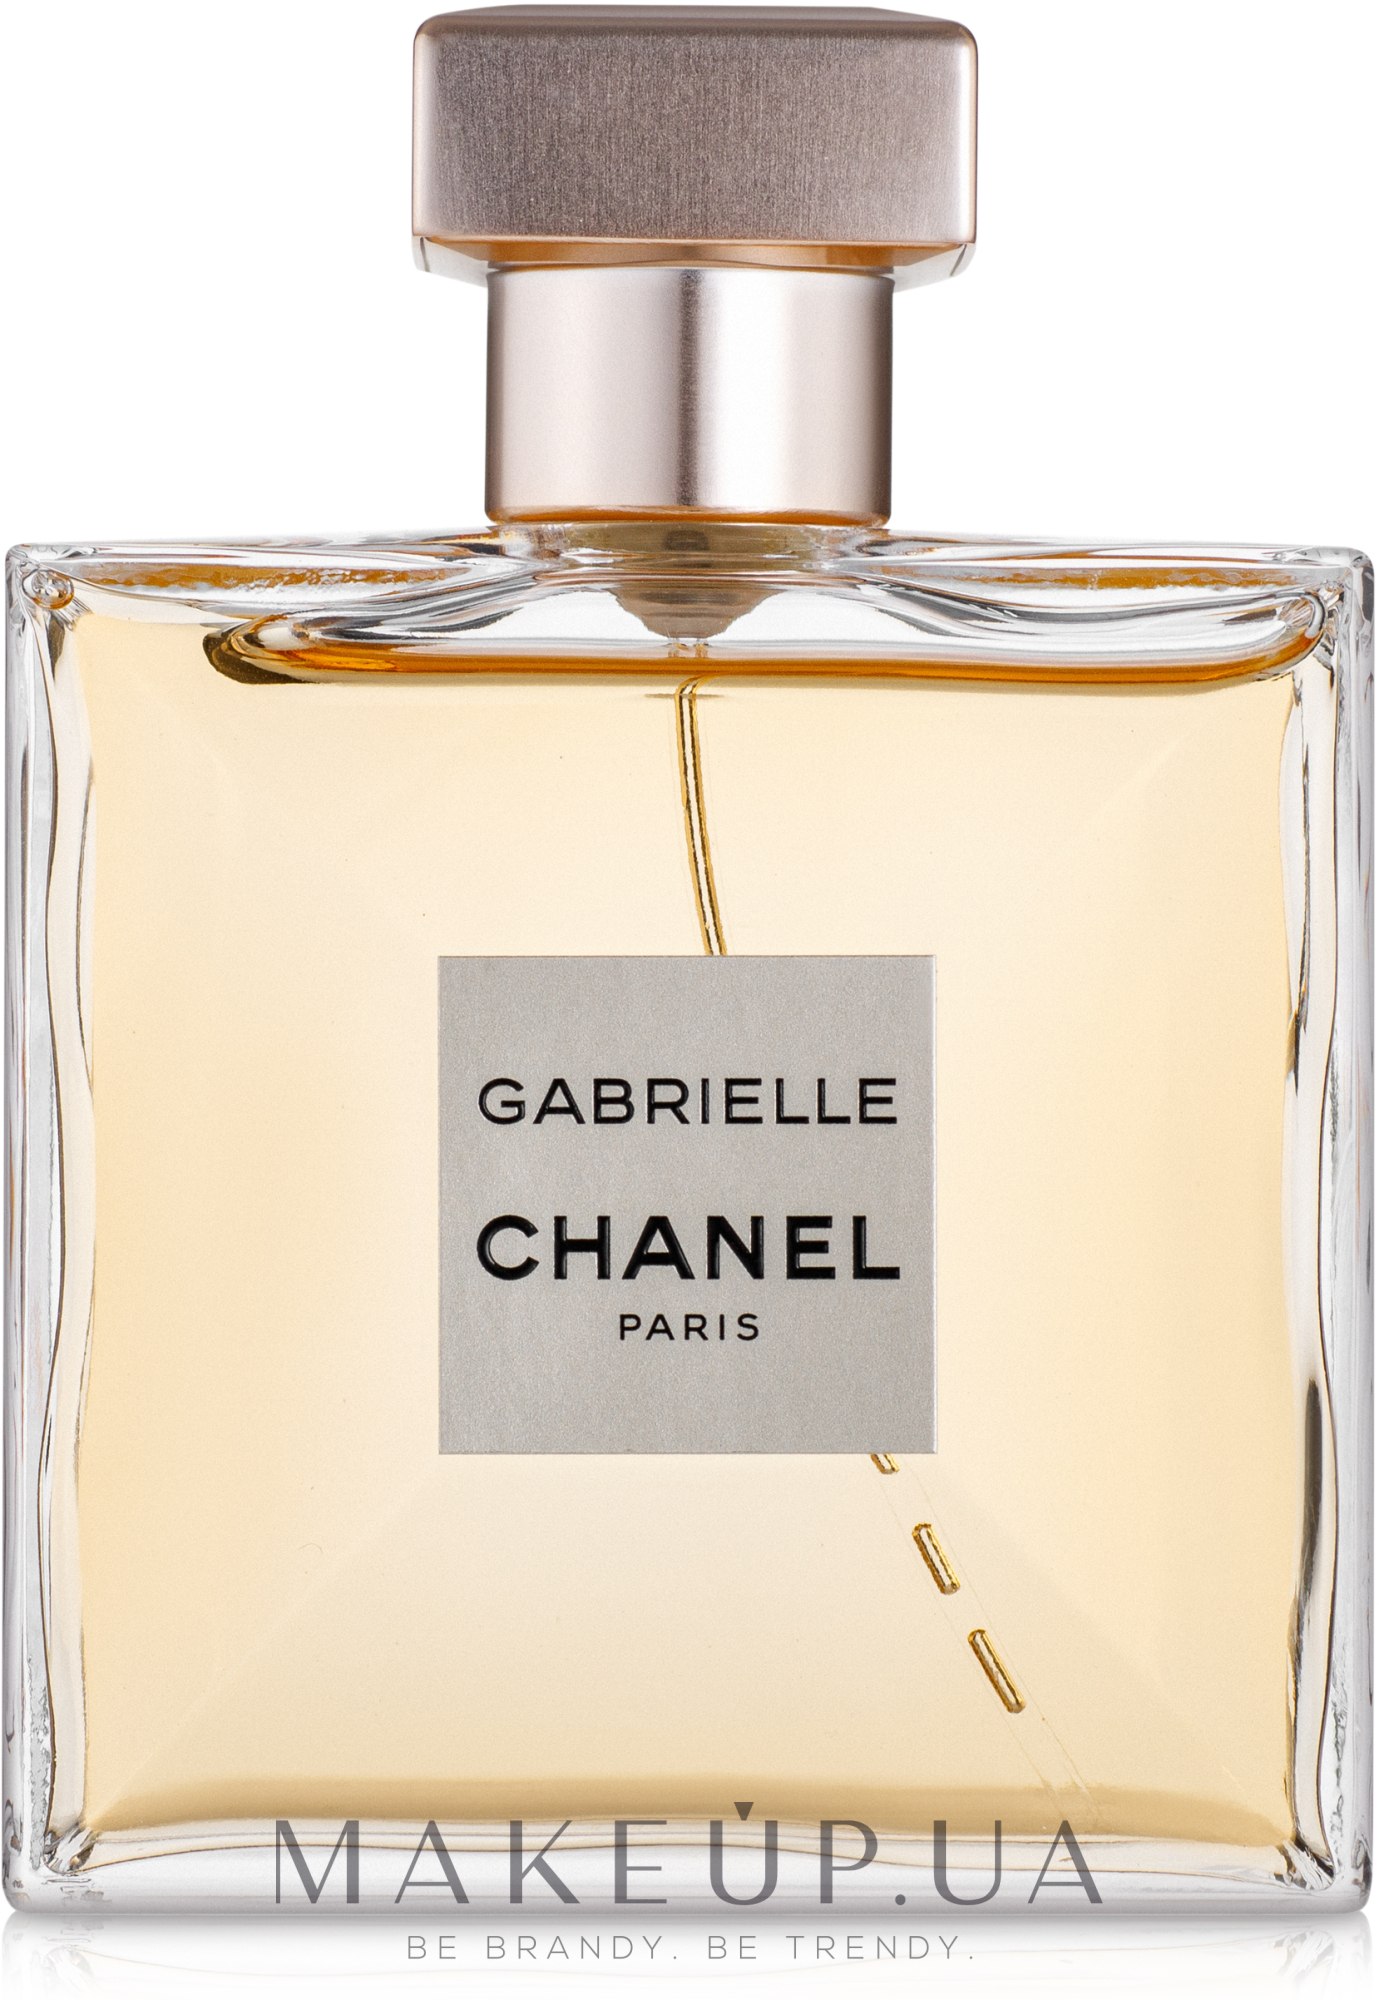 Chanel Gabrielle